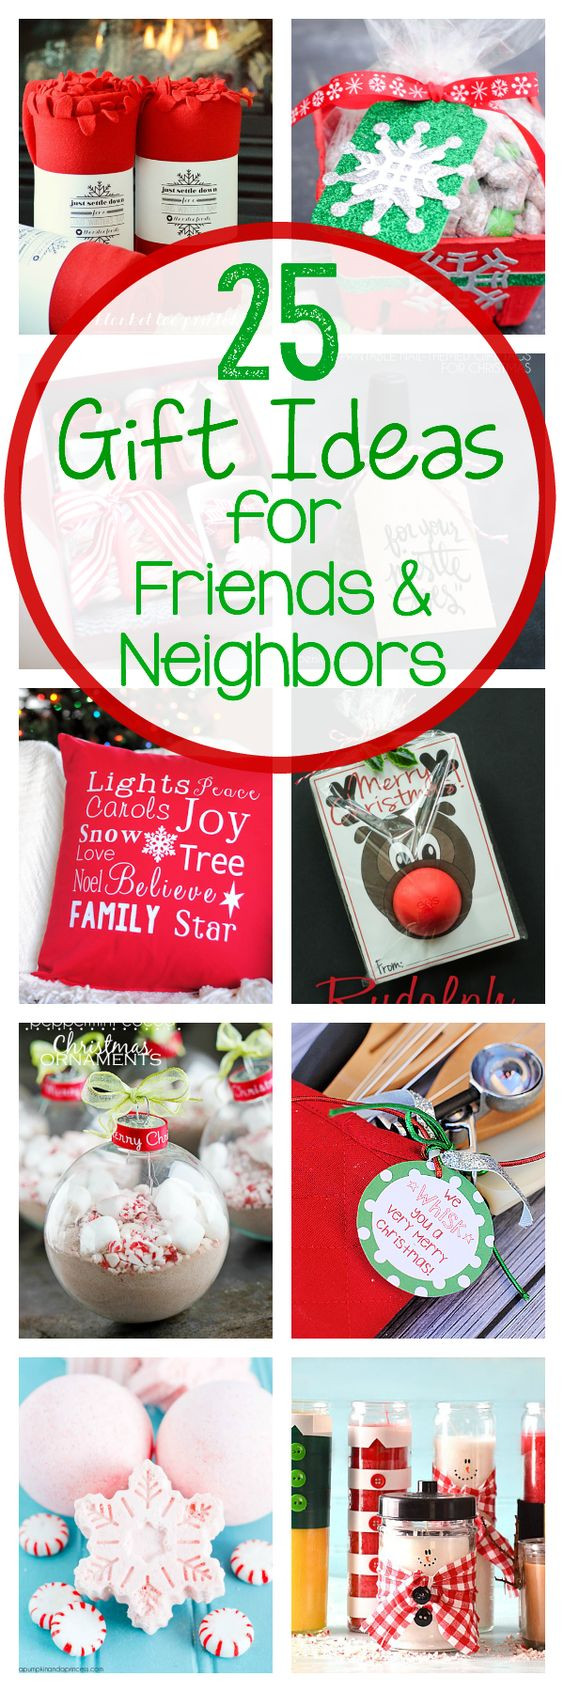 Friends Christmas Gift
 25 Gift Ideas for Friends & Neighbors